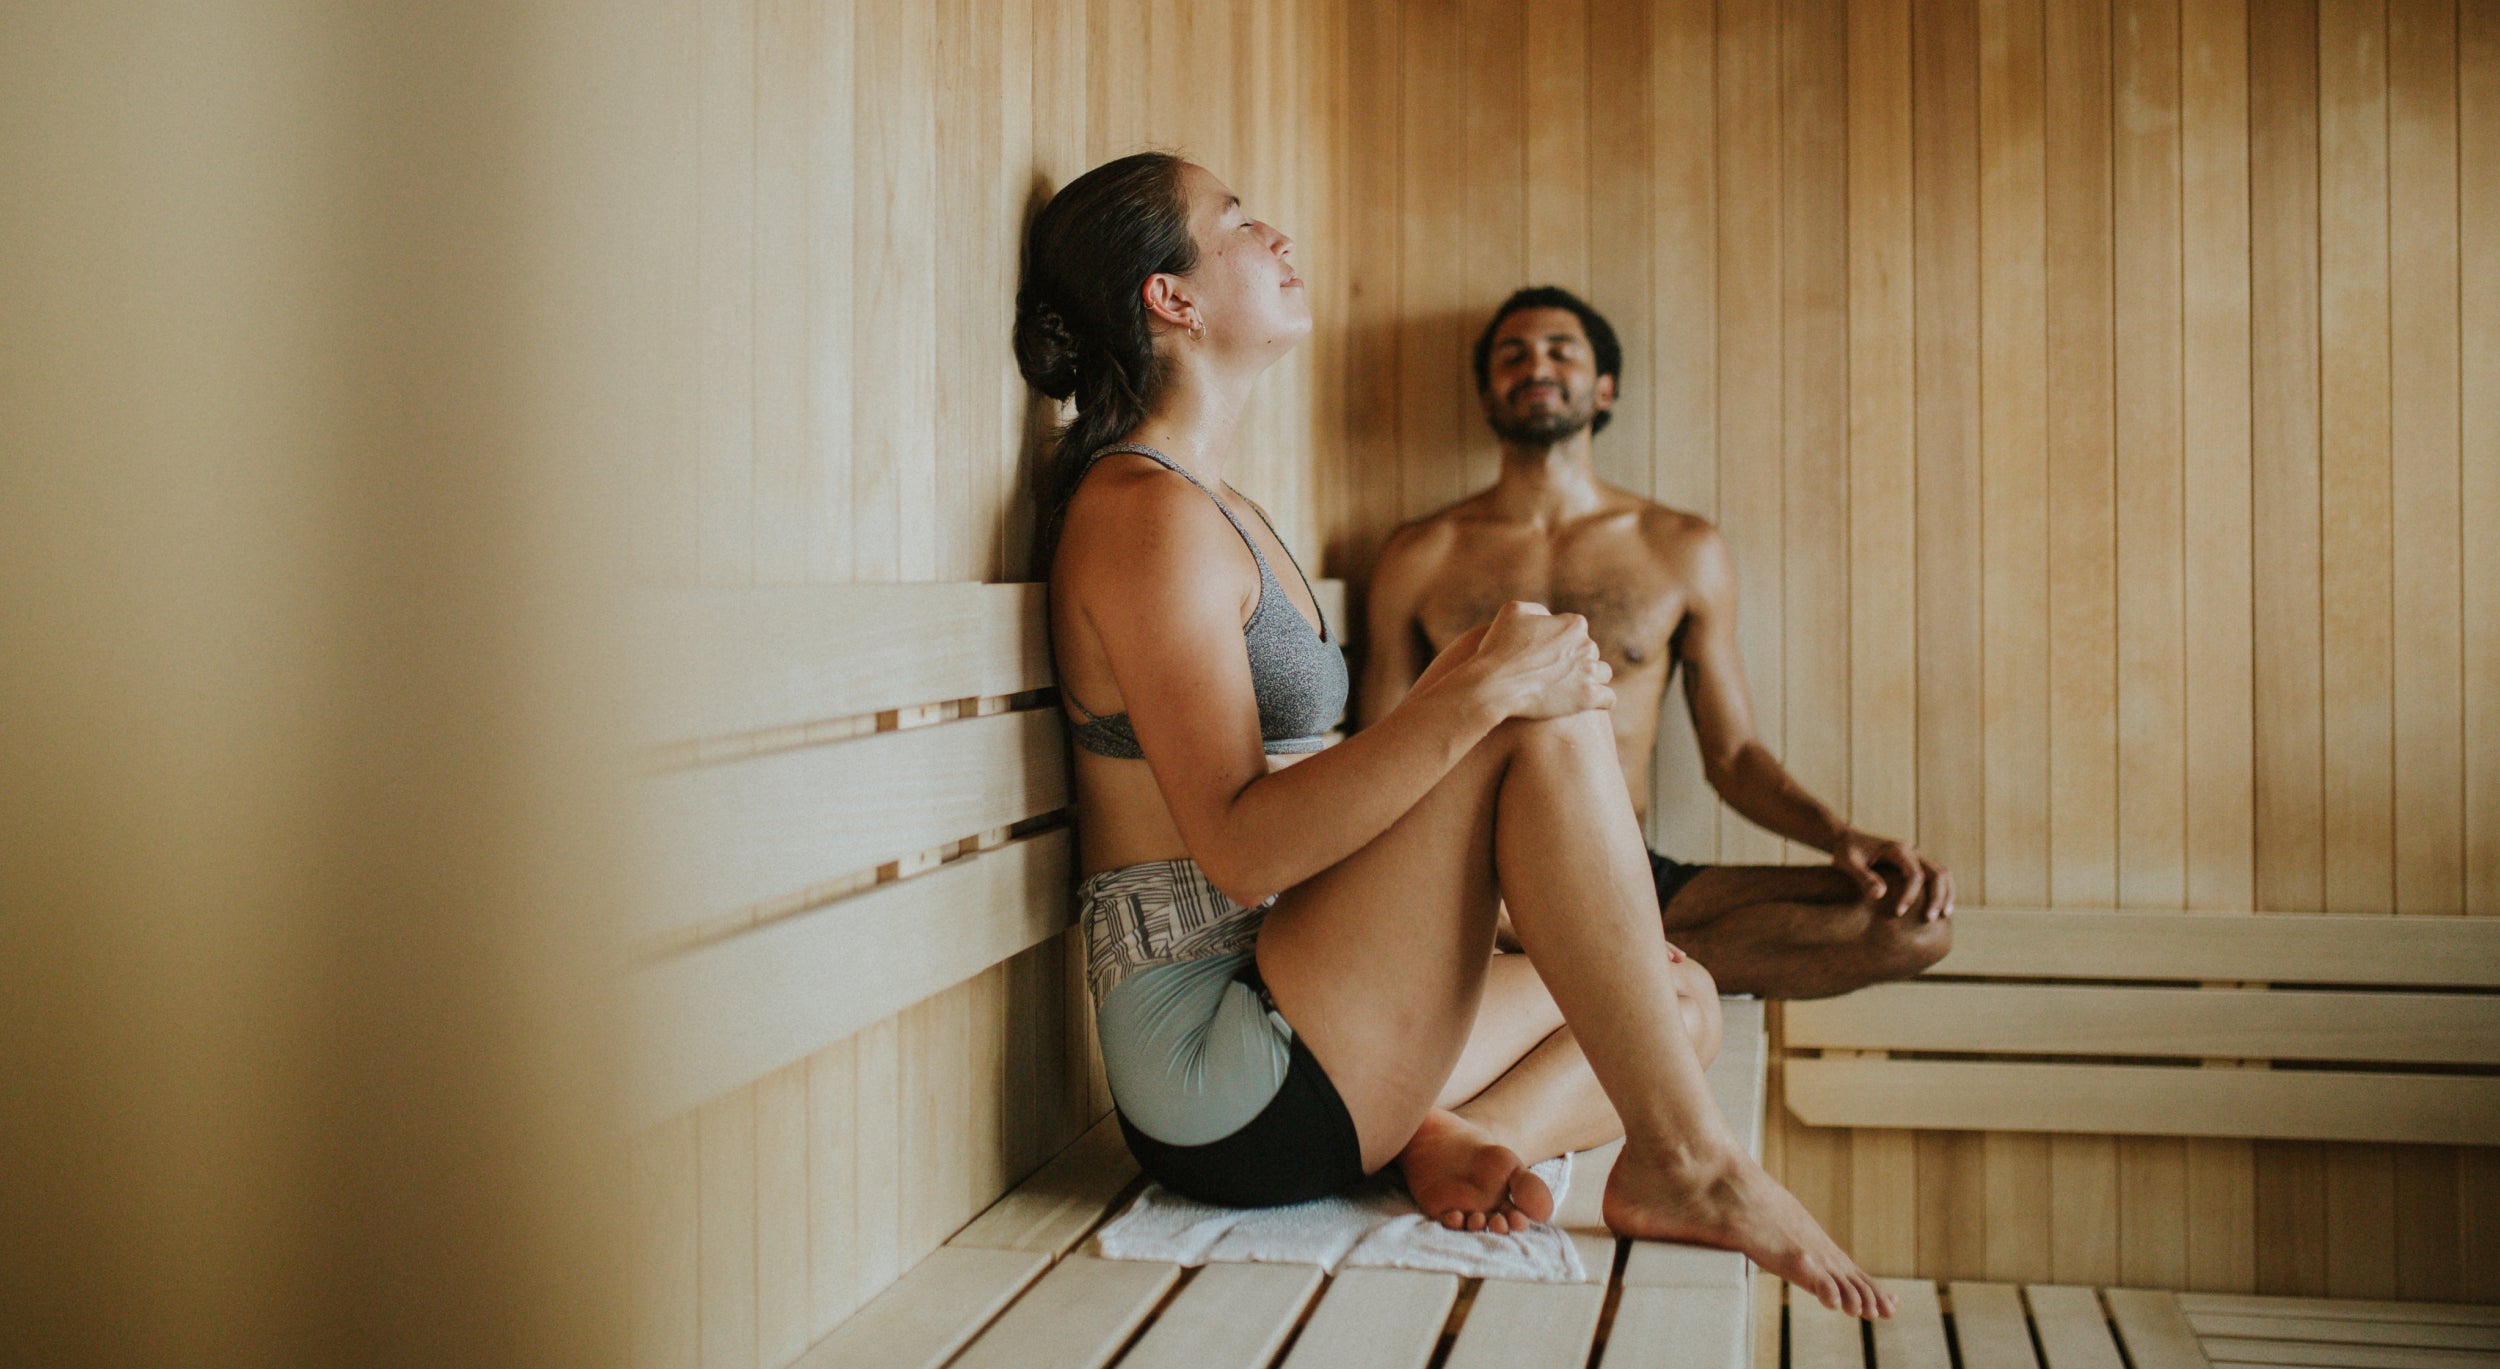 Couple enjoying a sauna together in Sauna House.